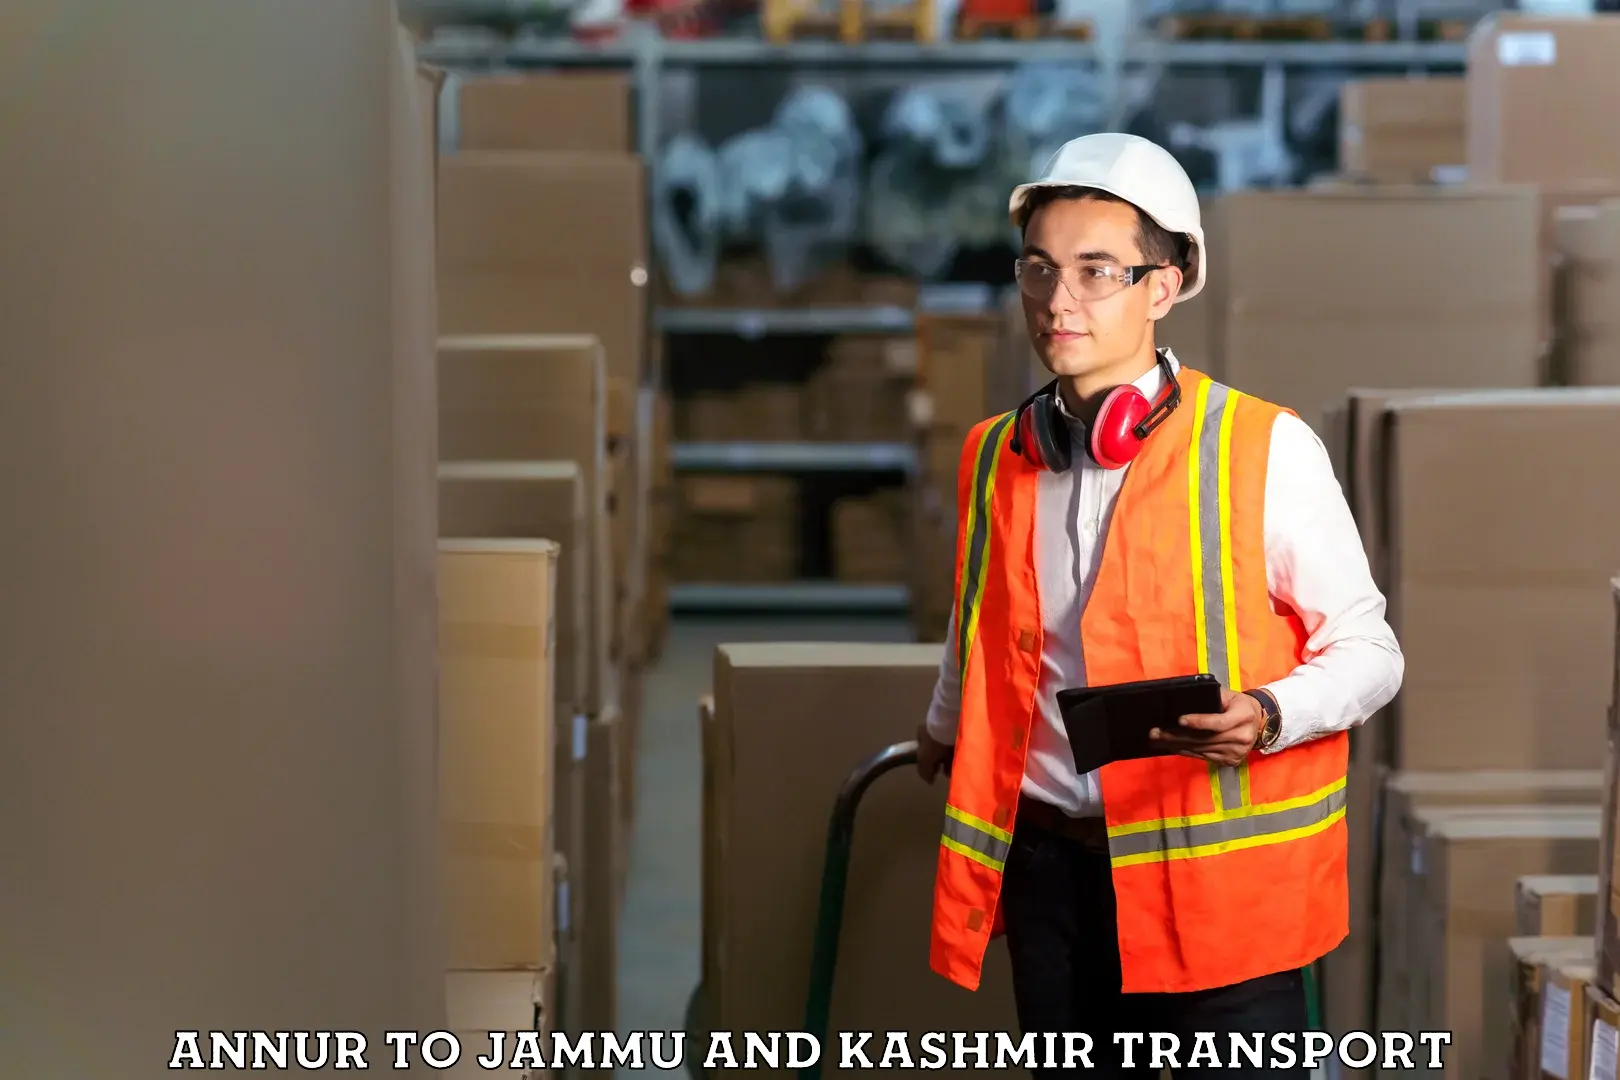 Truck transport companies in India Annur to Srinagar Kashmir